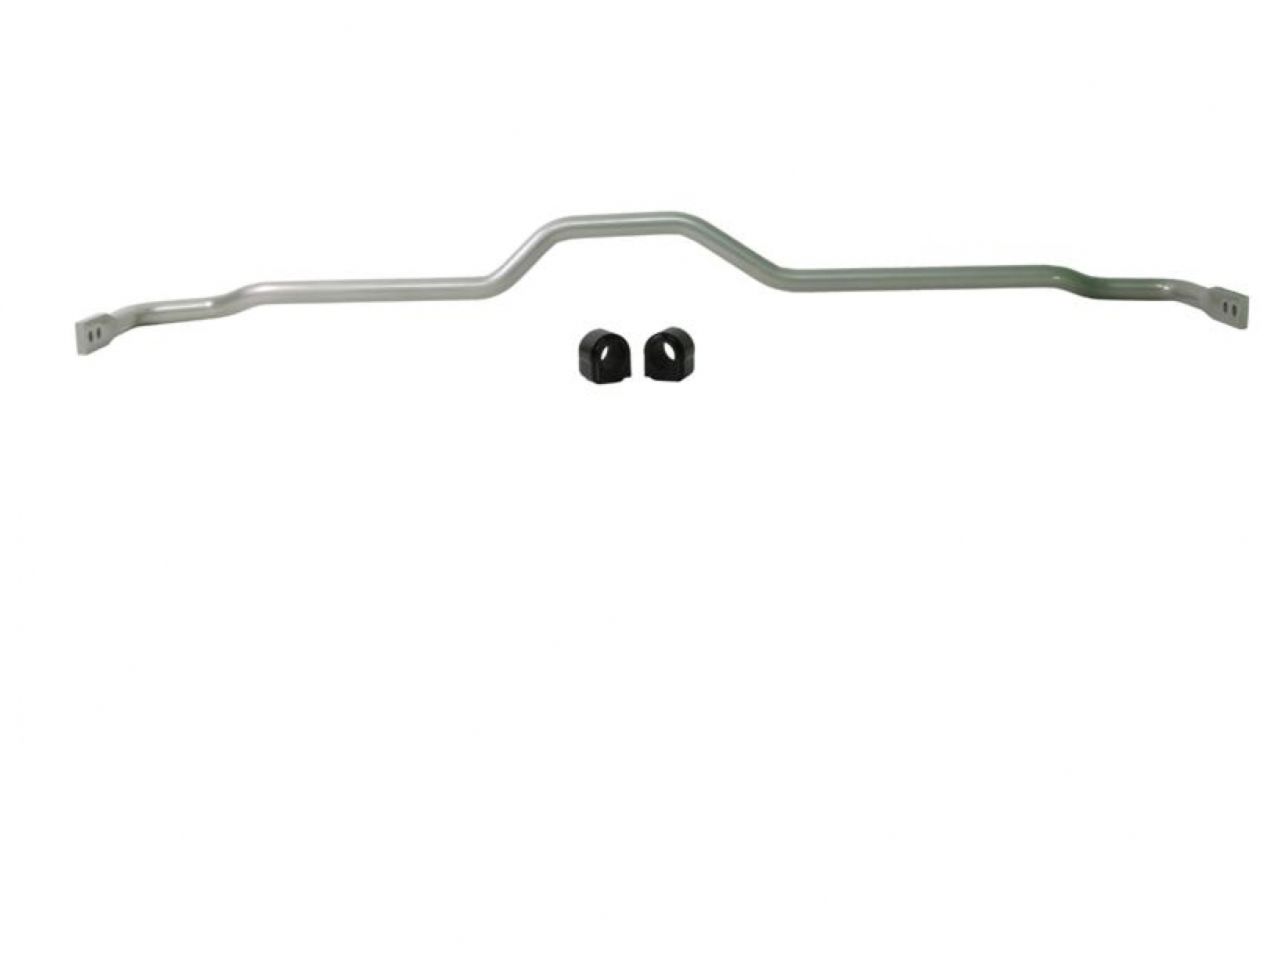 Whiteline Performance Rear Sway Bar - 24mm 2 Point Adjustable